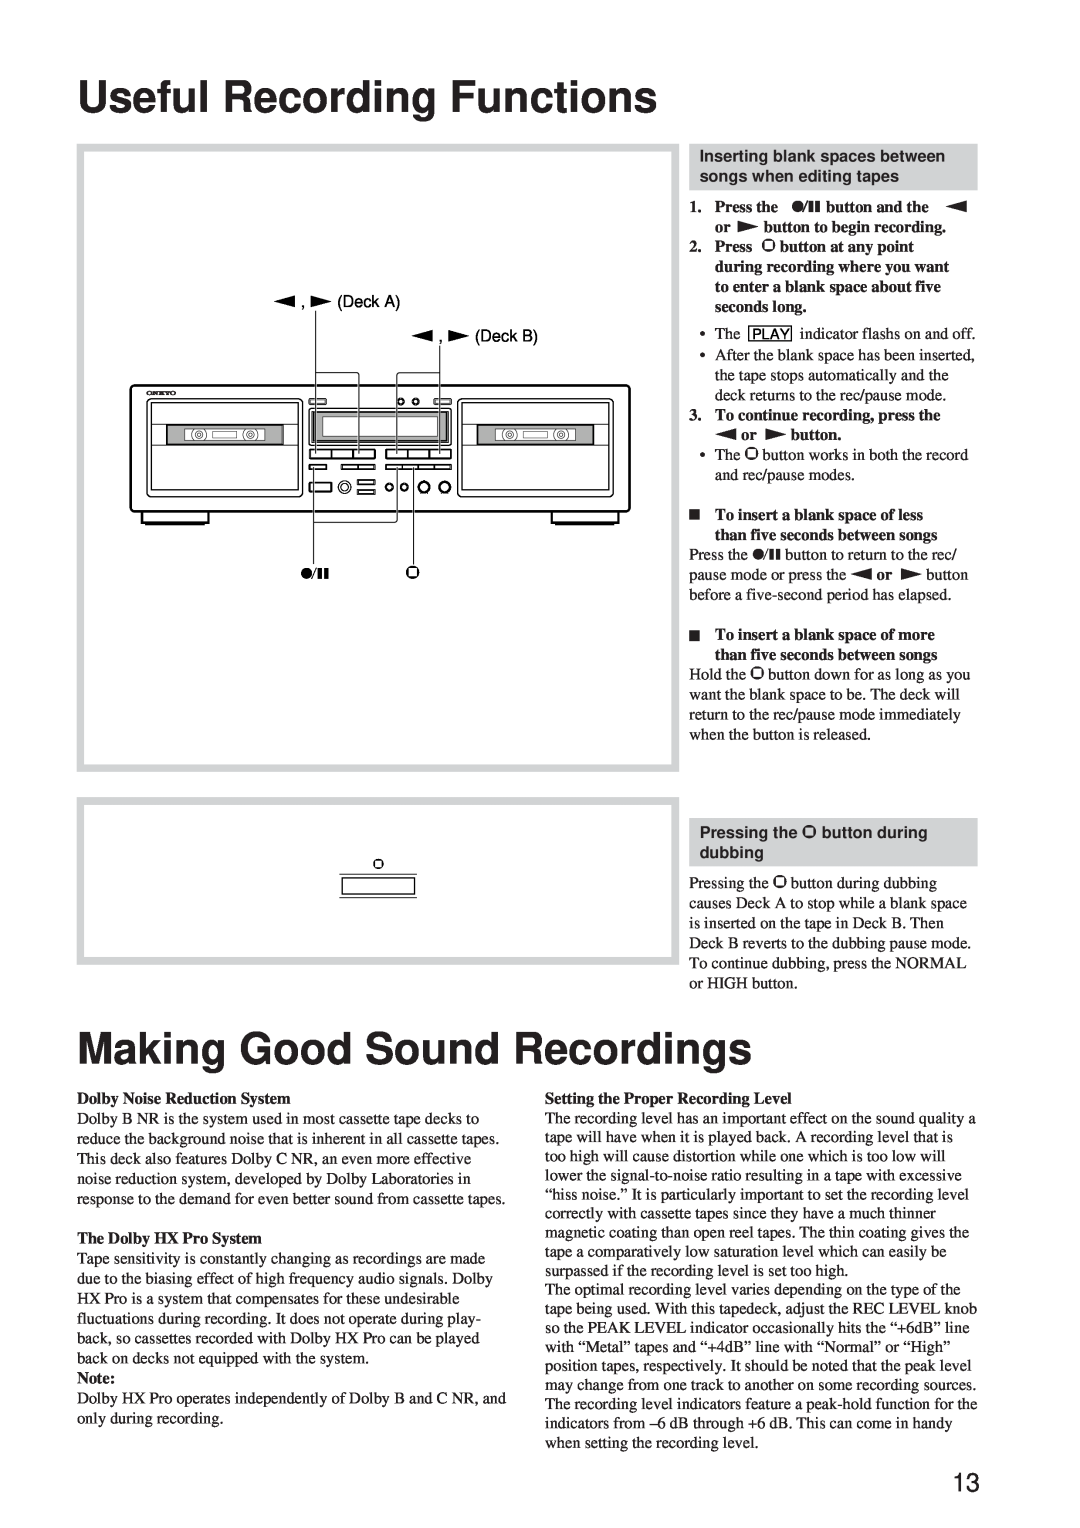 Onkyo TA-RW344, TA-RW544 Useful Recording Functions, Making Good Sound Recordings, Pressing the button during dubbing 